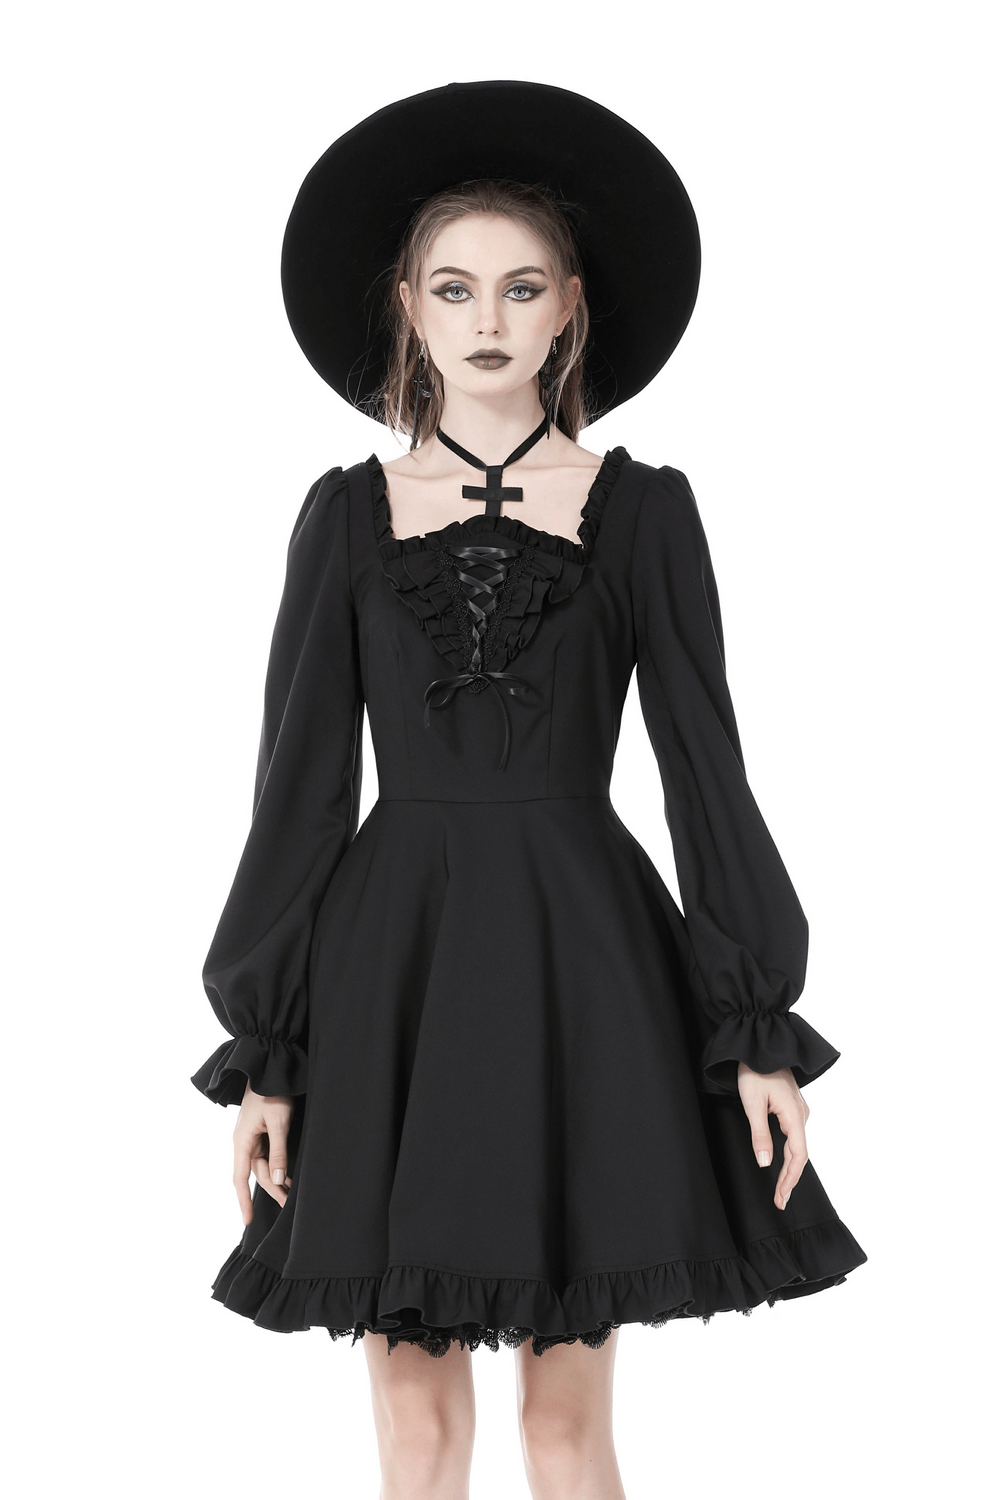 Women's Black Gothic Cross Neck Long Sleeves Dress